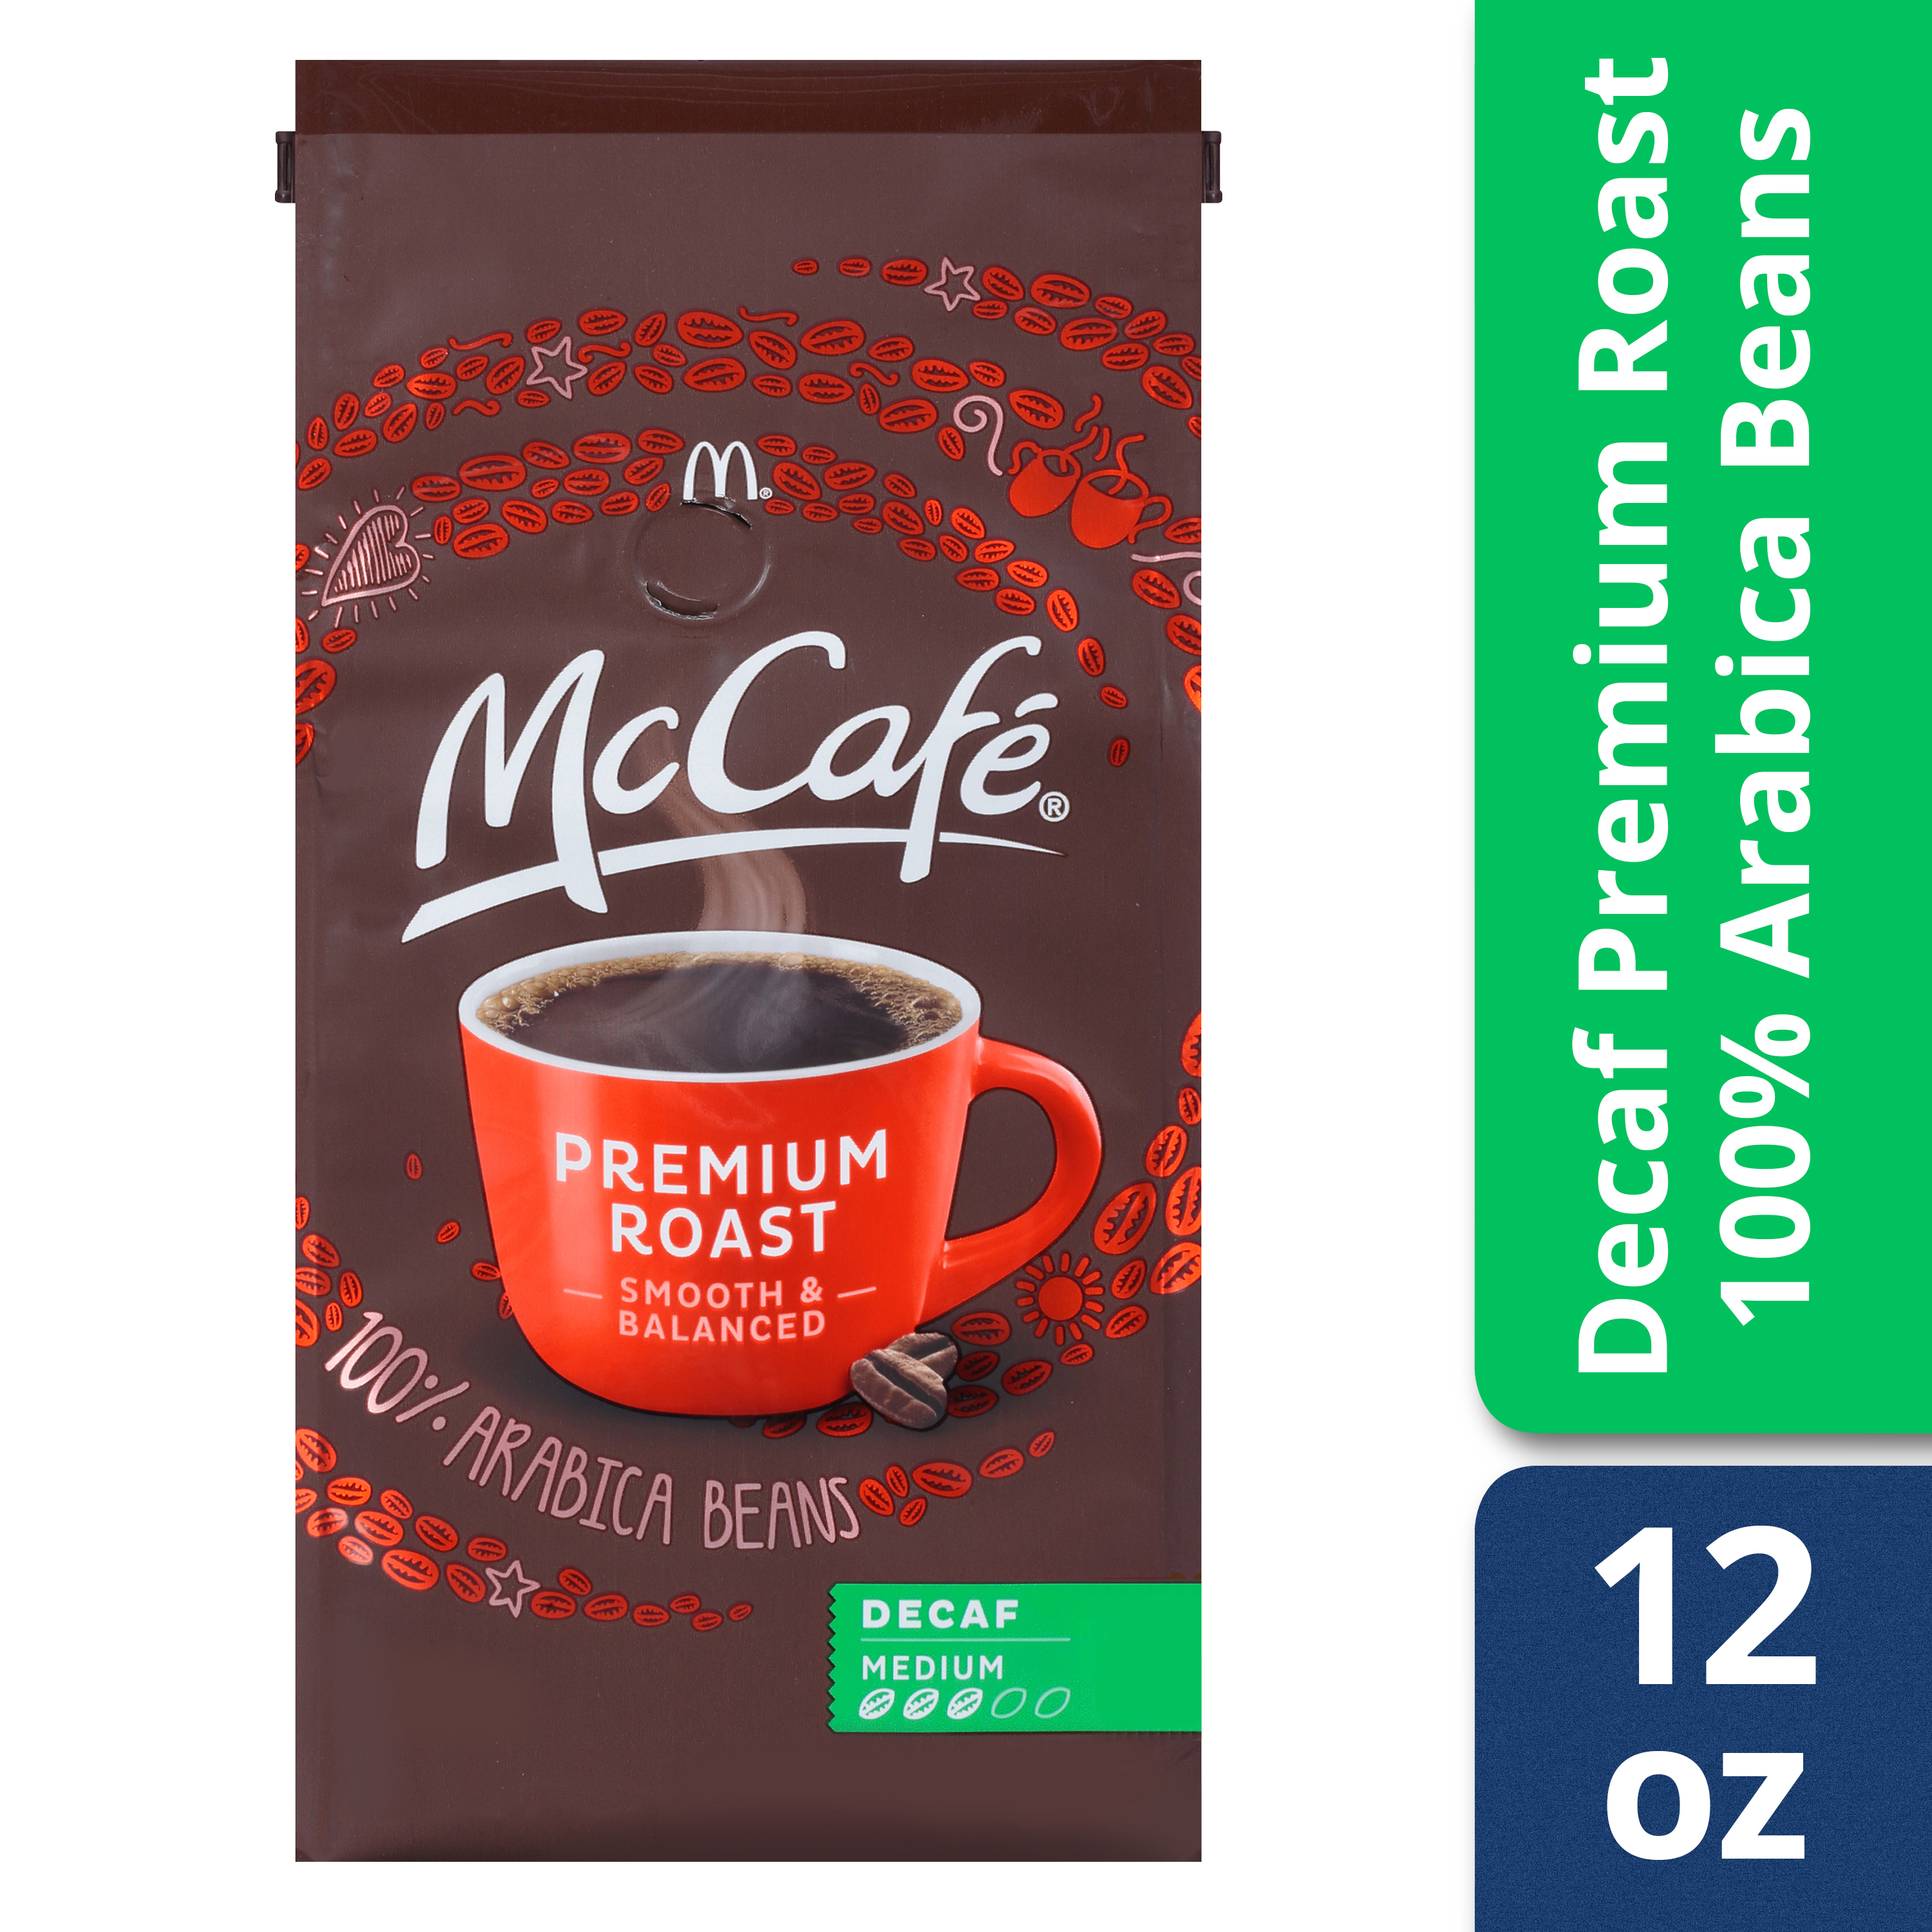 McCafe McCafe Premium Roast Medium Decaf Ground Coffee, Decaffeinated, 12 oz Bag